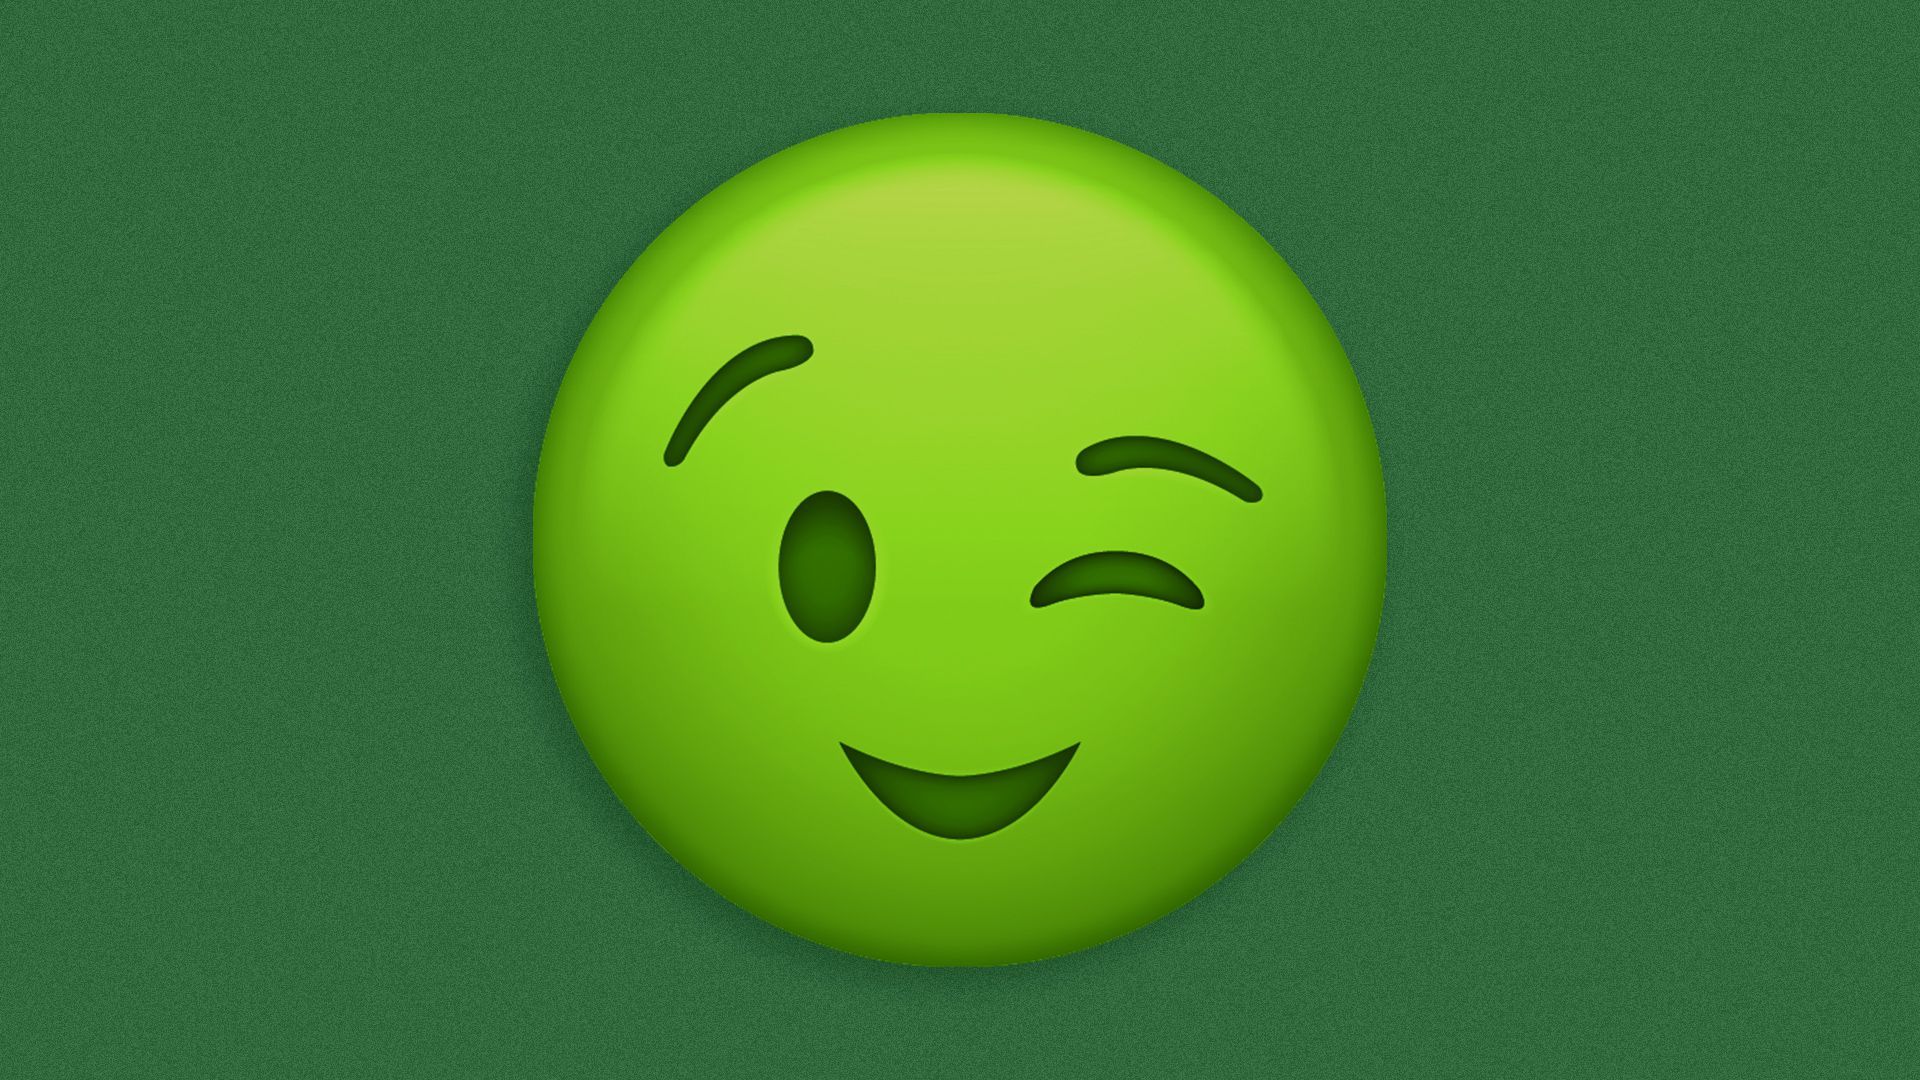 Illustration of a green winking smiley face emoji. 